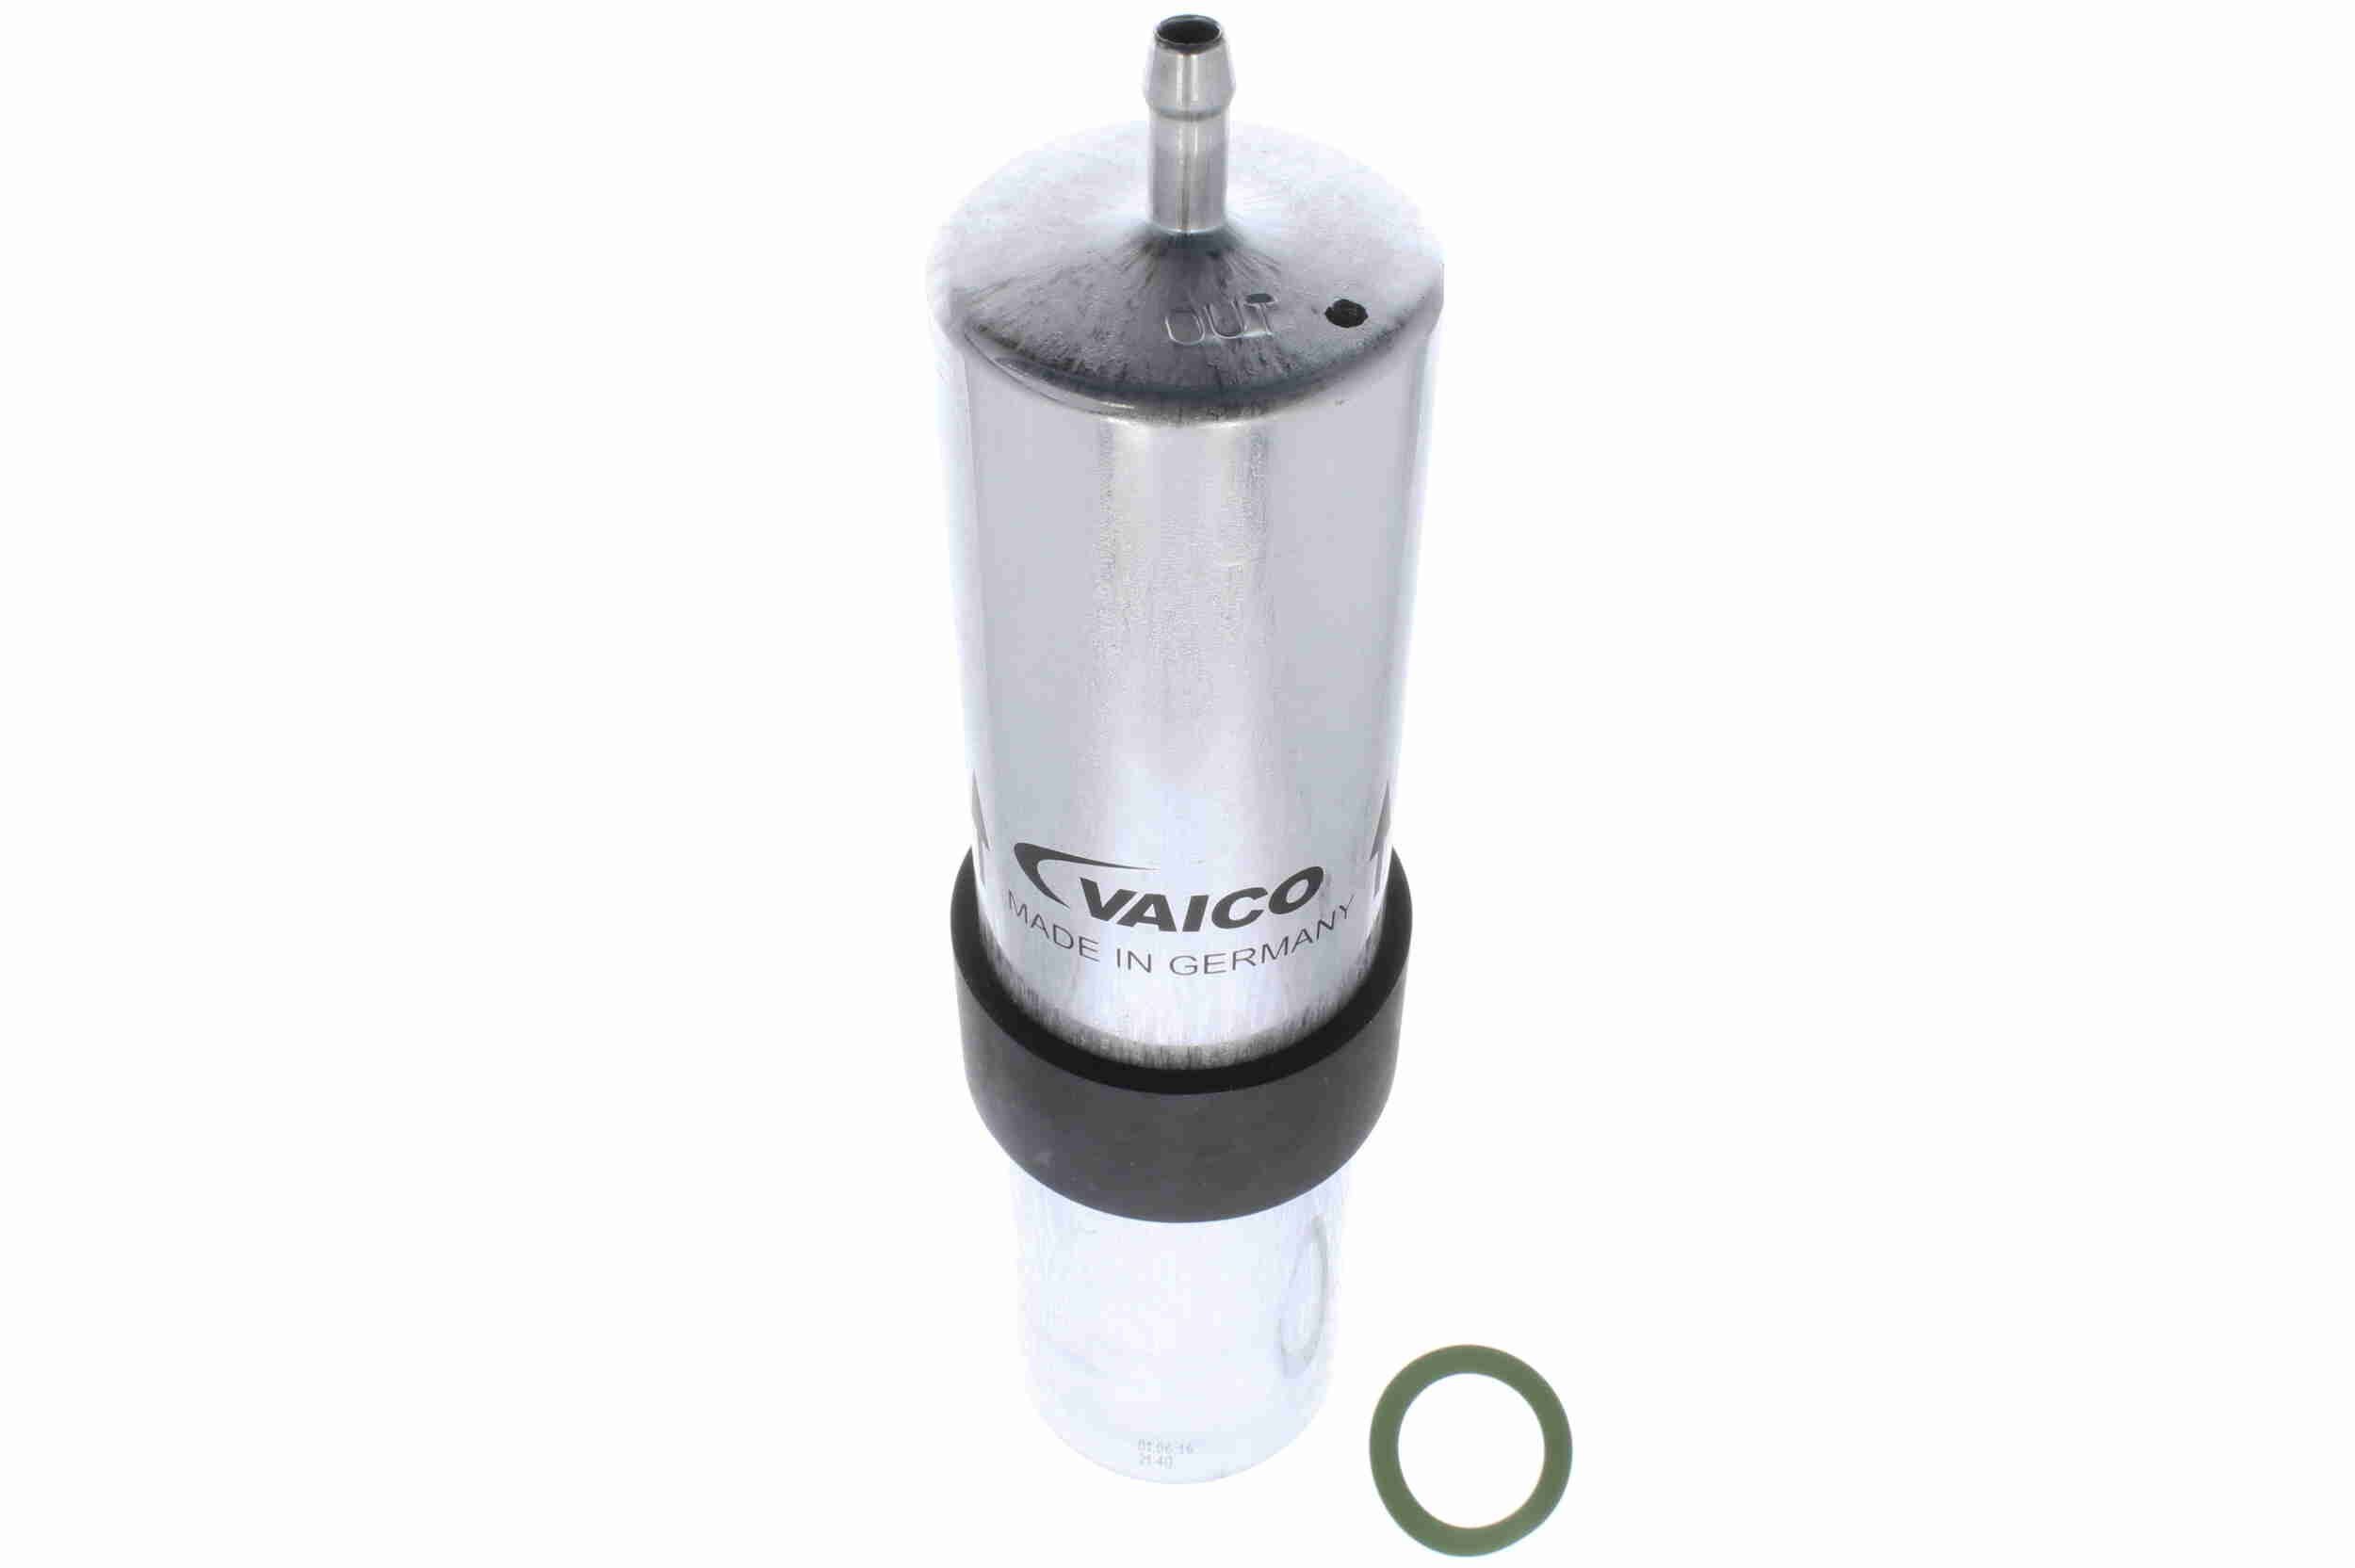 VAICO V20-1380 Fuel filter In-Line Filter, Diesel, Q+, original equipment manufacturer quality MADE IN GERMANY